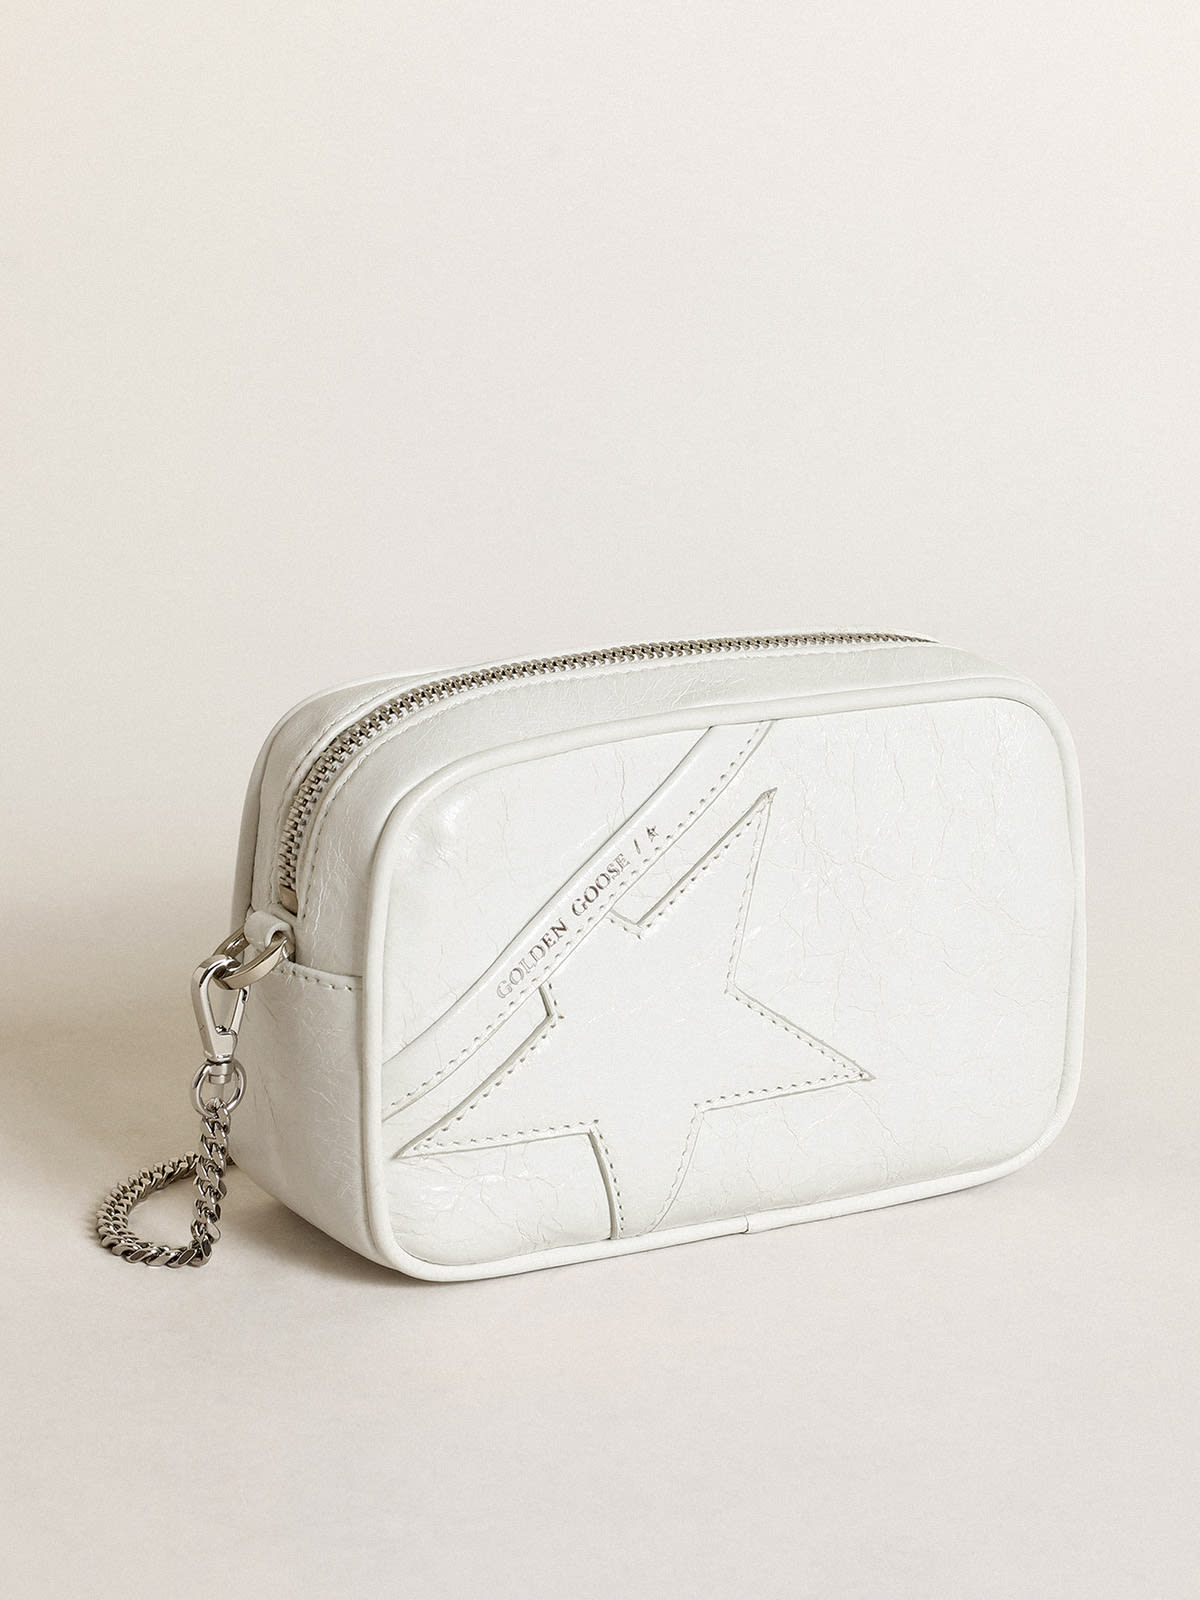 Golden Goose - Mini Star Bag in pelle lucida bianca con stella ton sur ton in 